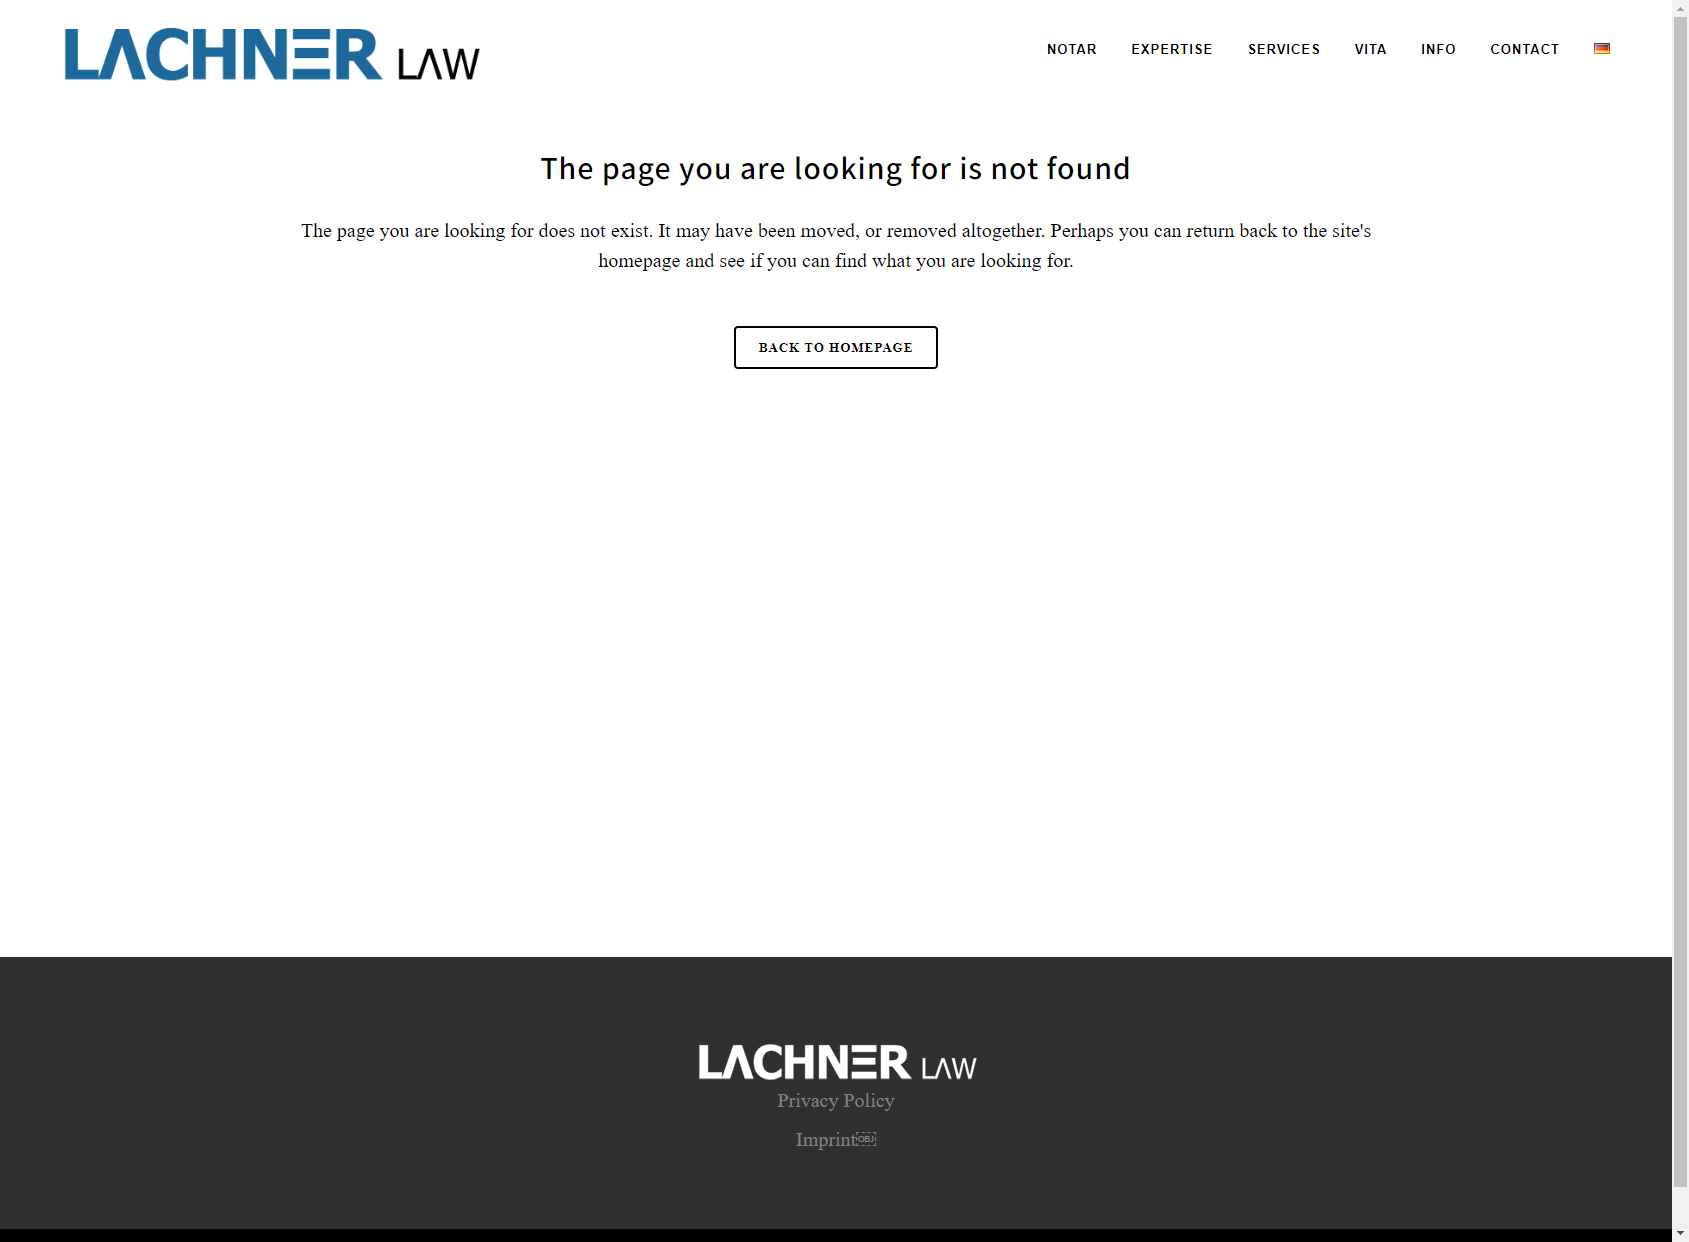 Dr. Constantin Lachner / Lachner Law